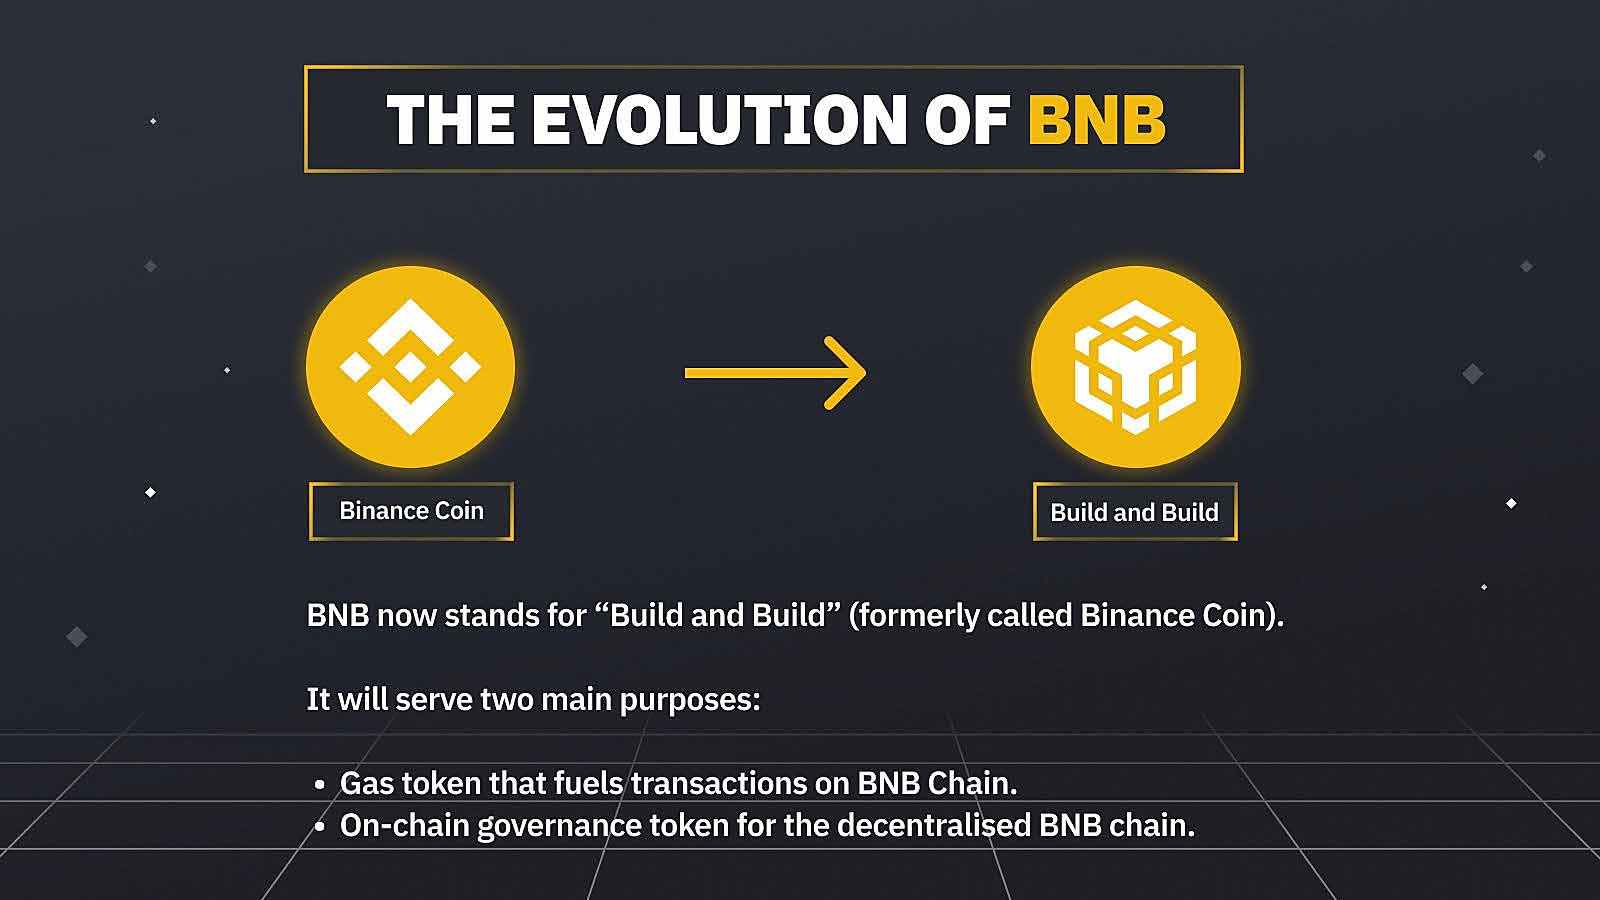 The evolution of BNB